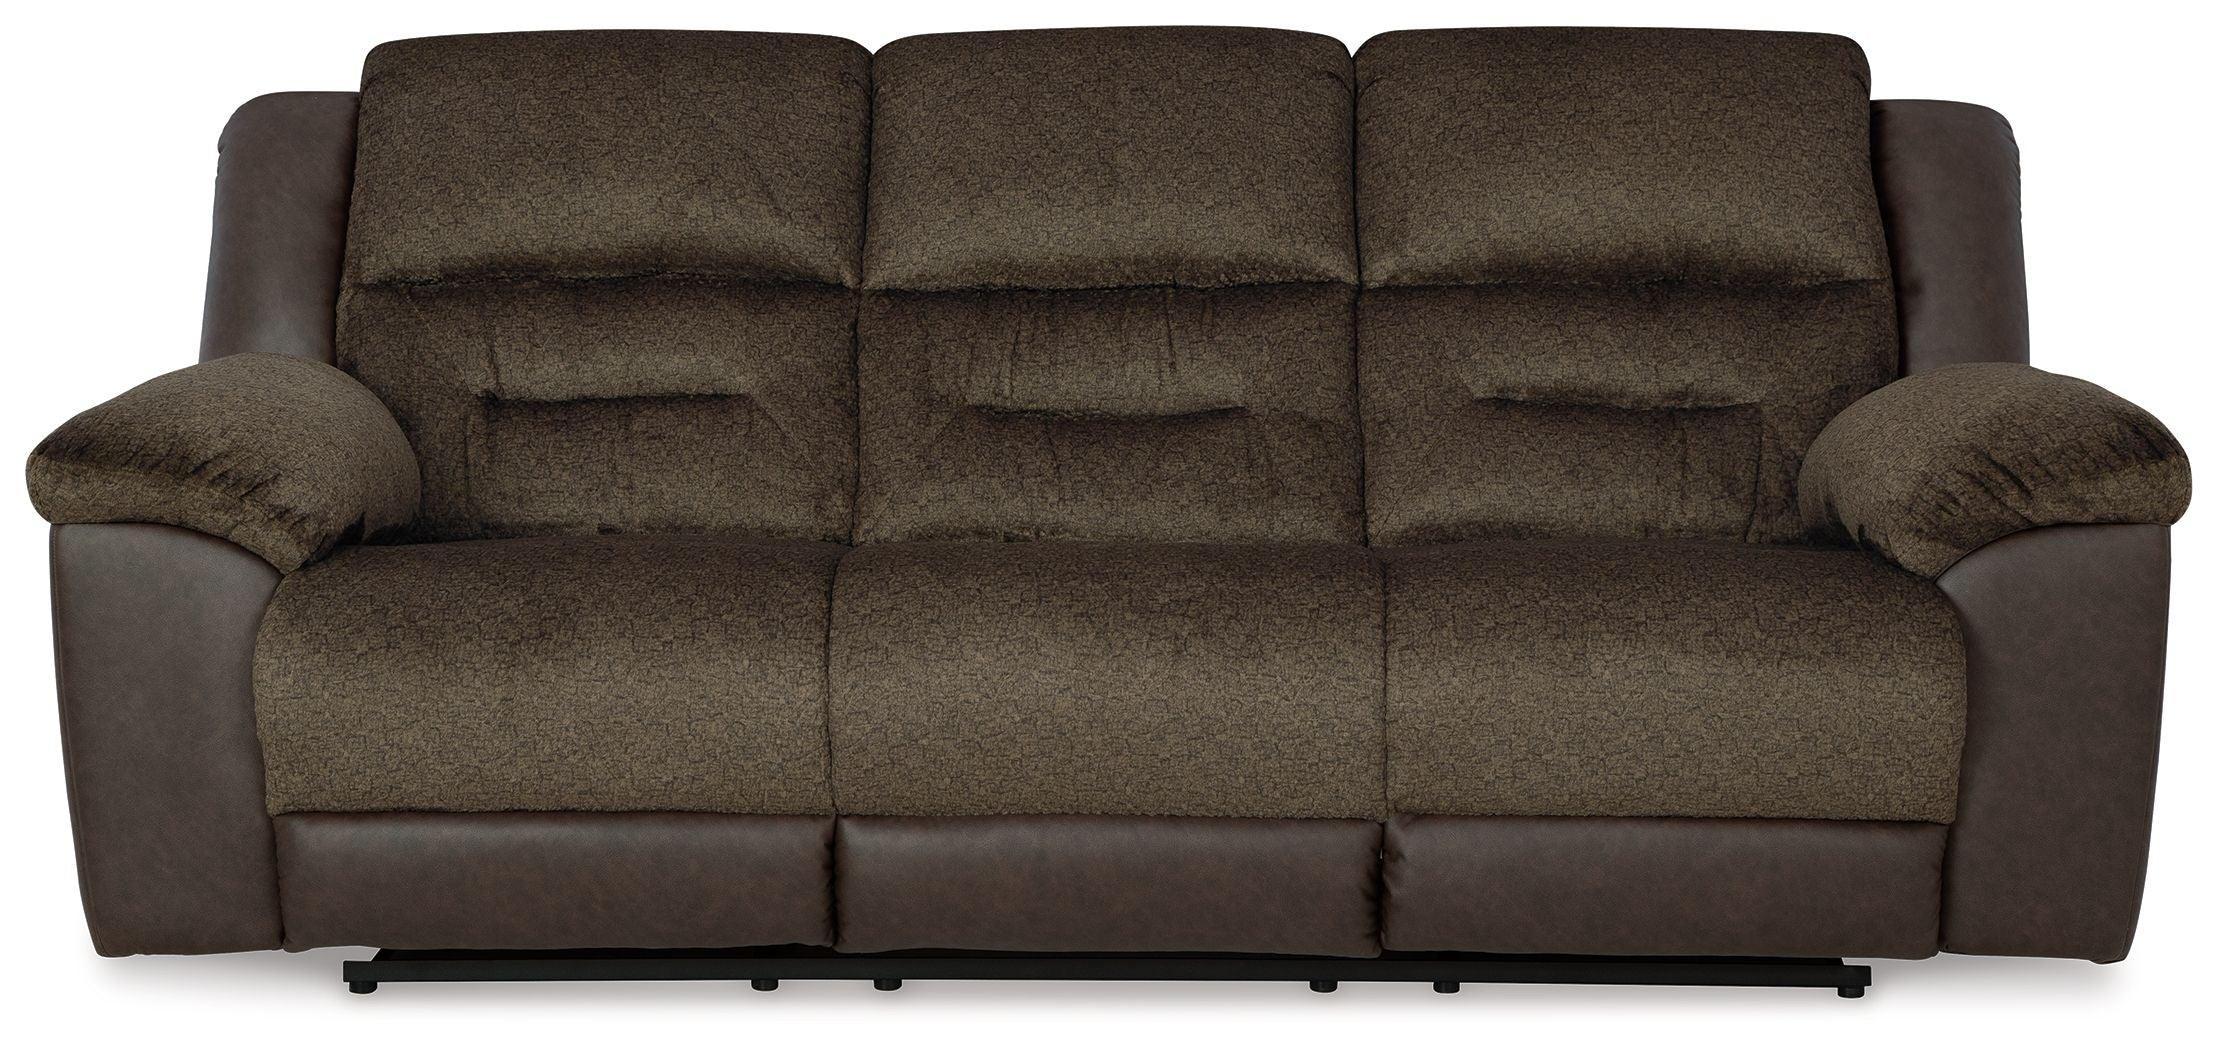 Benchcraft® - Dorman - Chocolate - Reclining Sofa - 5th Avenue Furniture